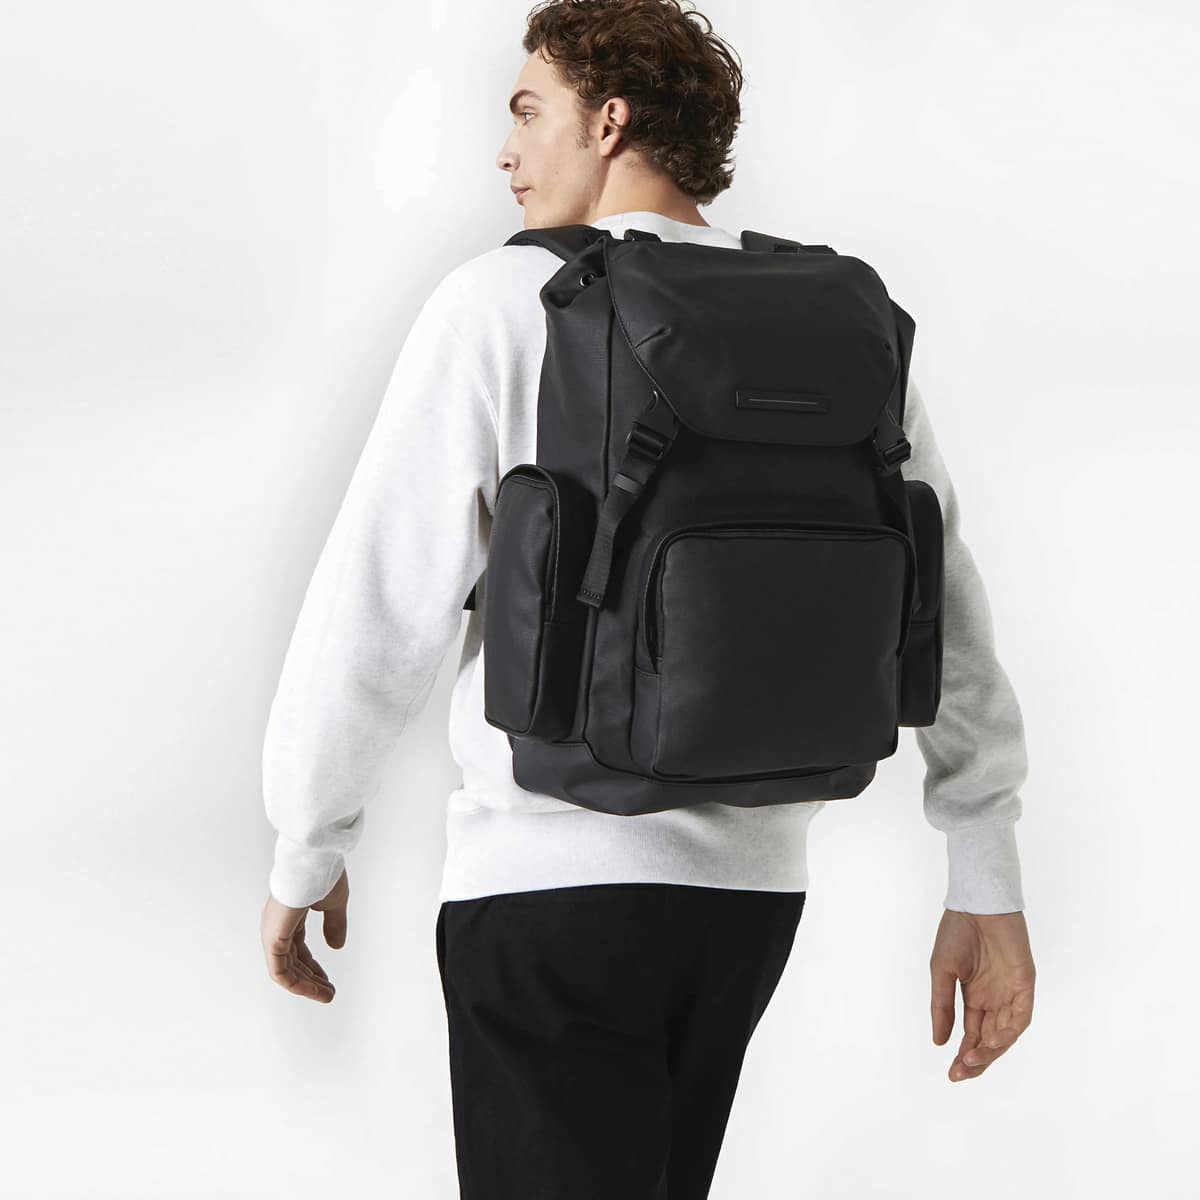 Black carry-on backpack